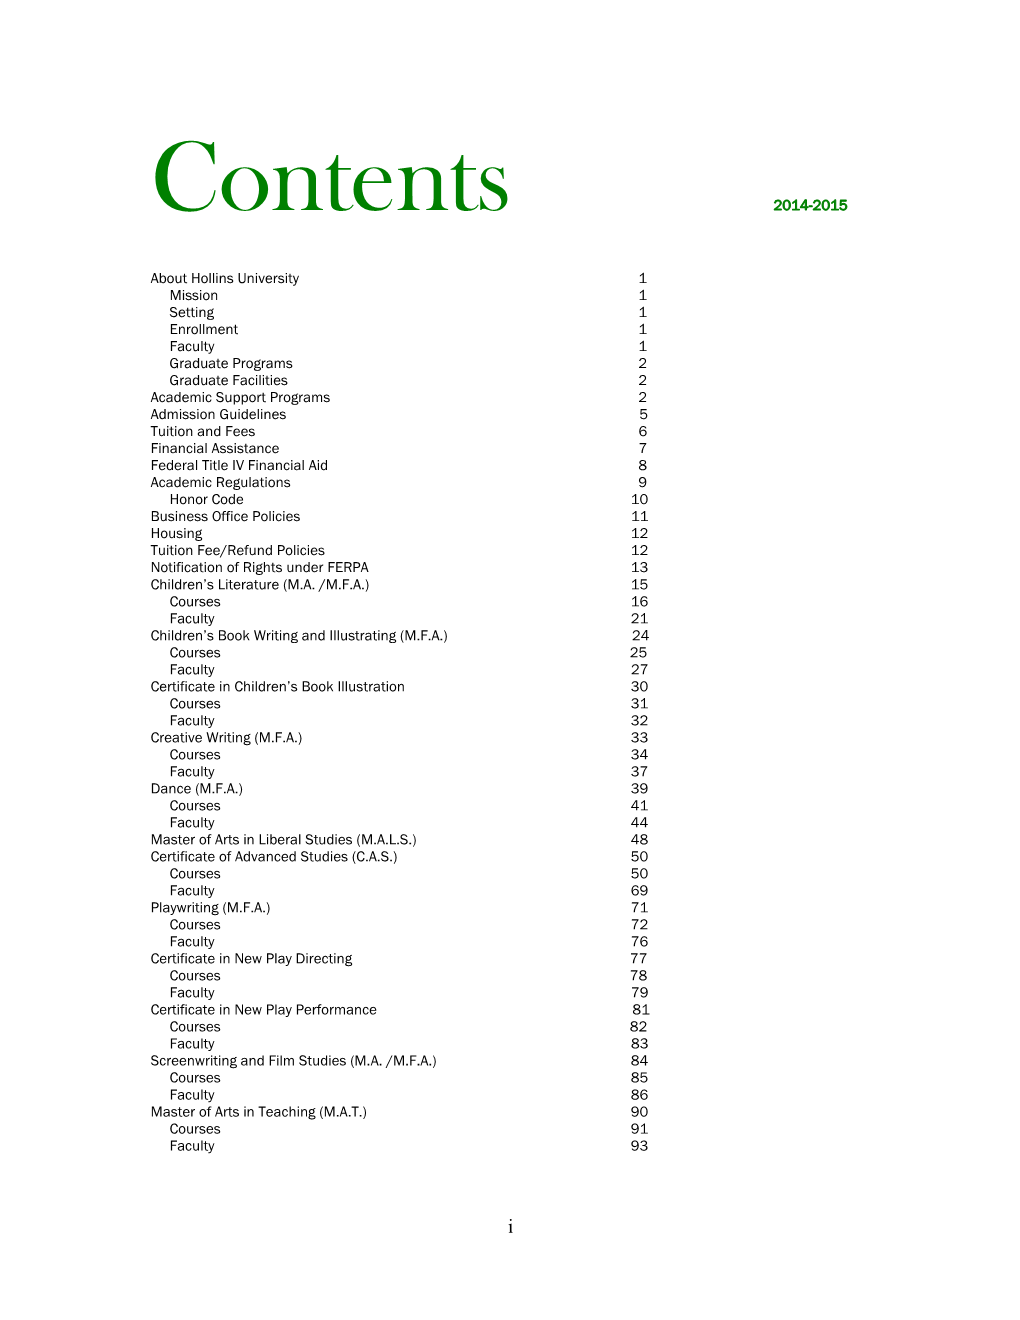 Contents 2014-2015